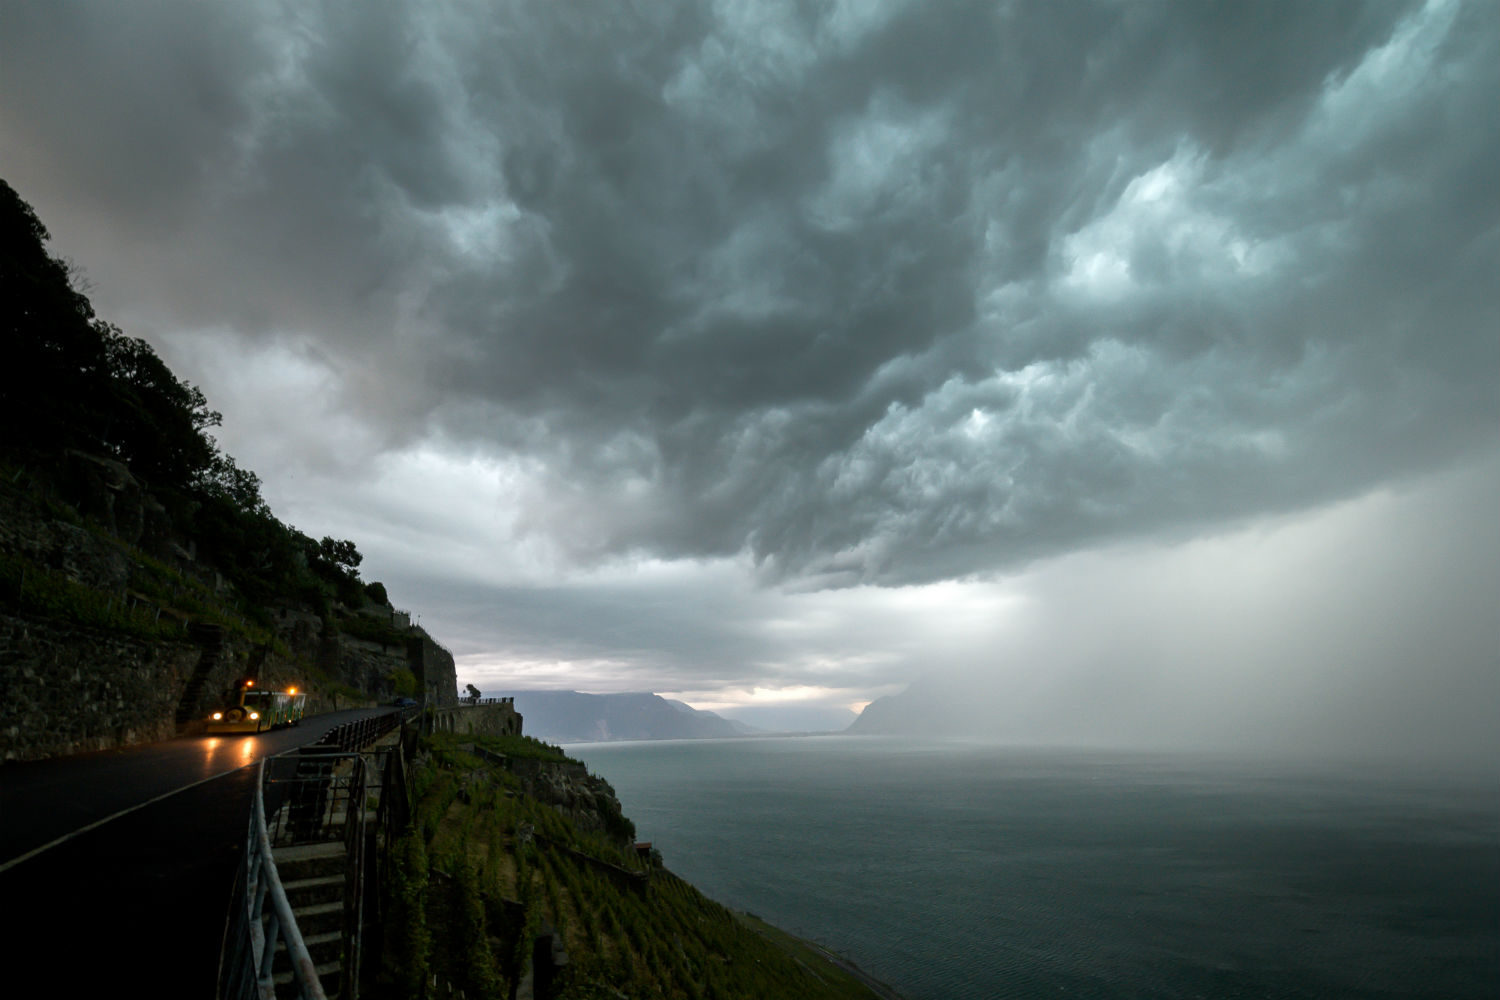 A storm sweeps over Lake Geneva